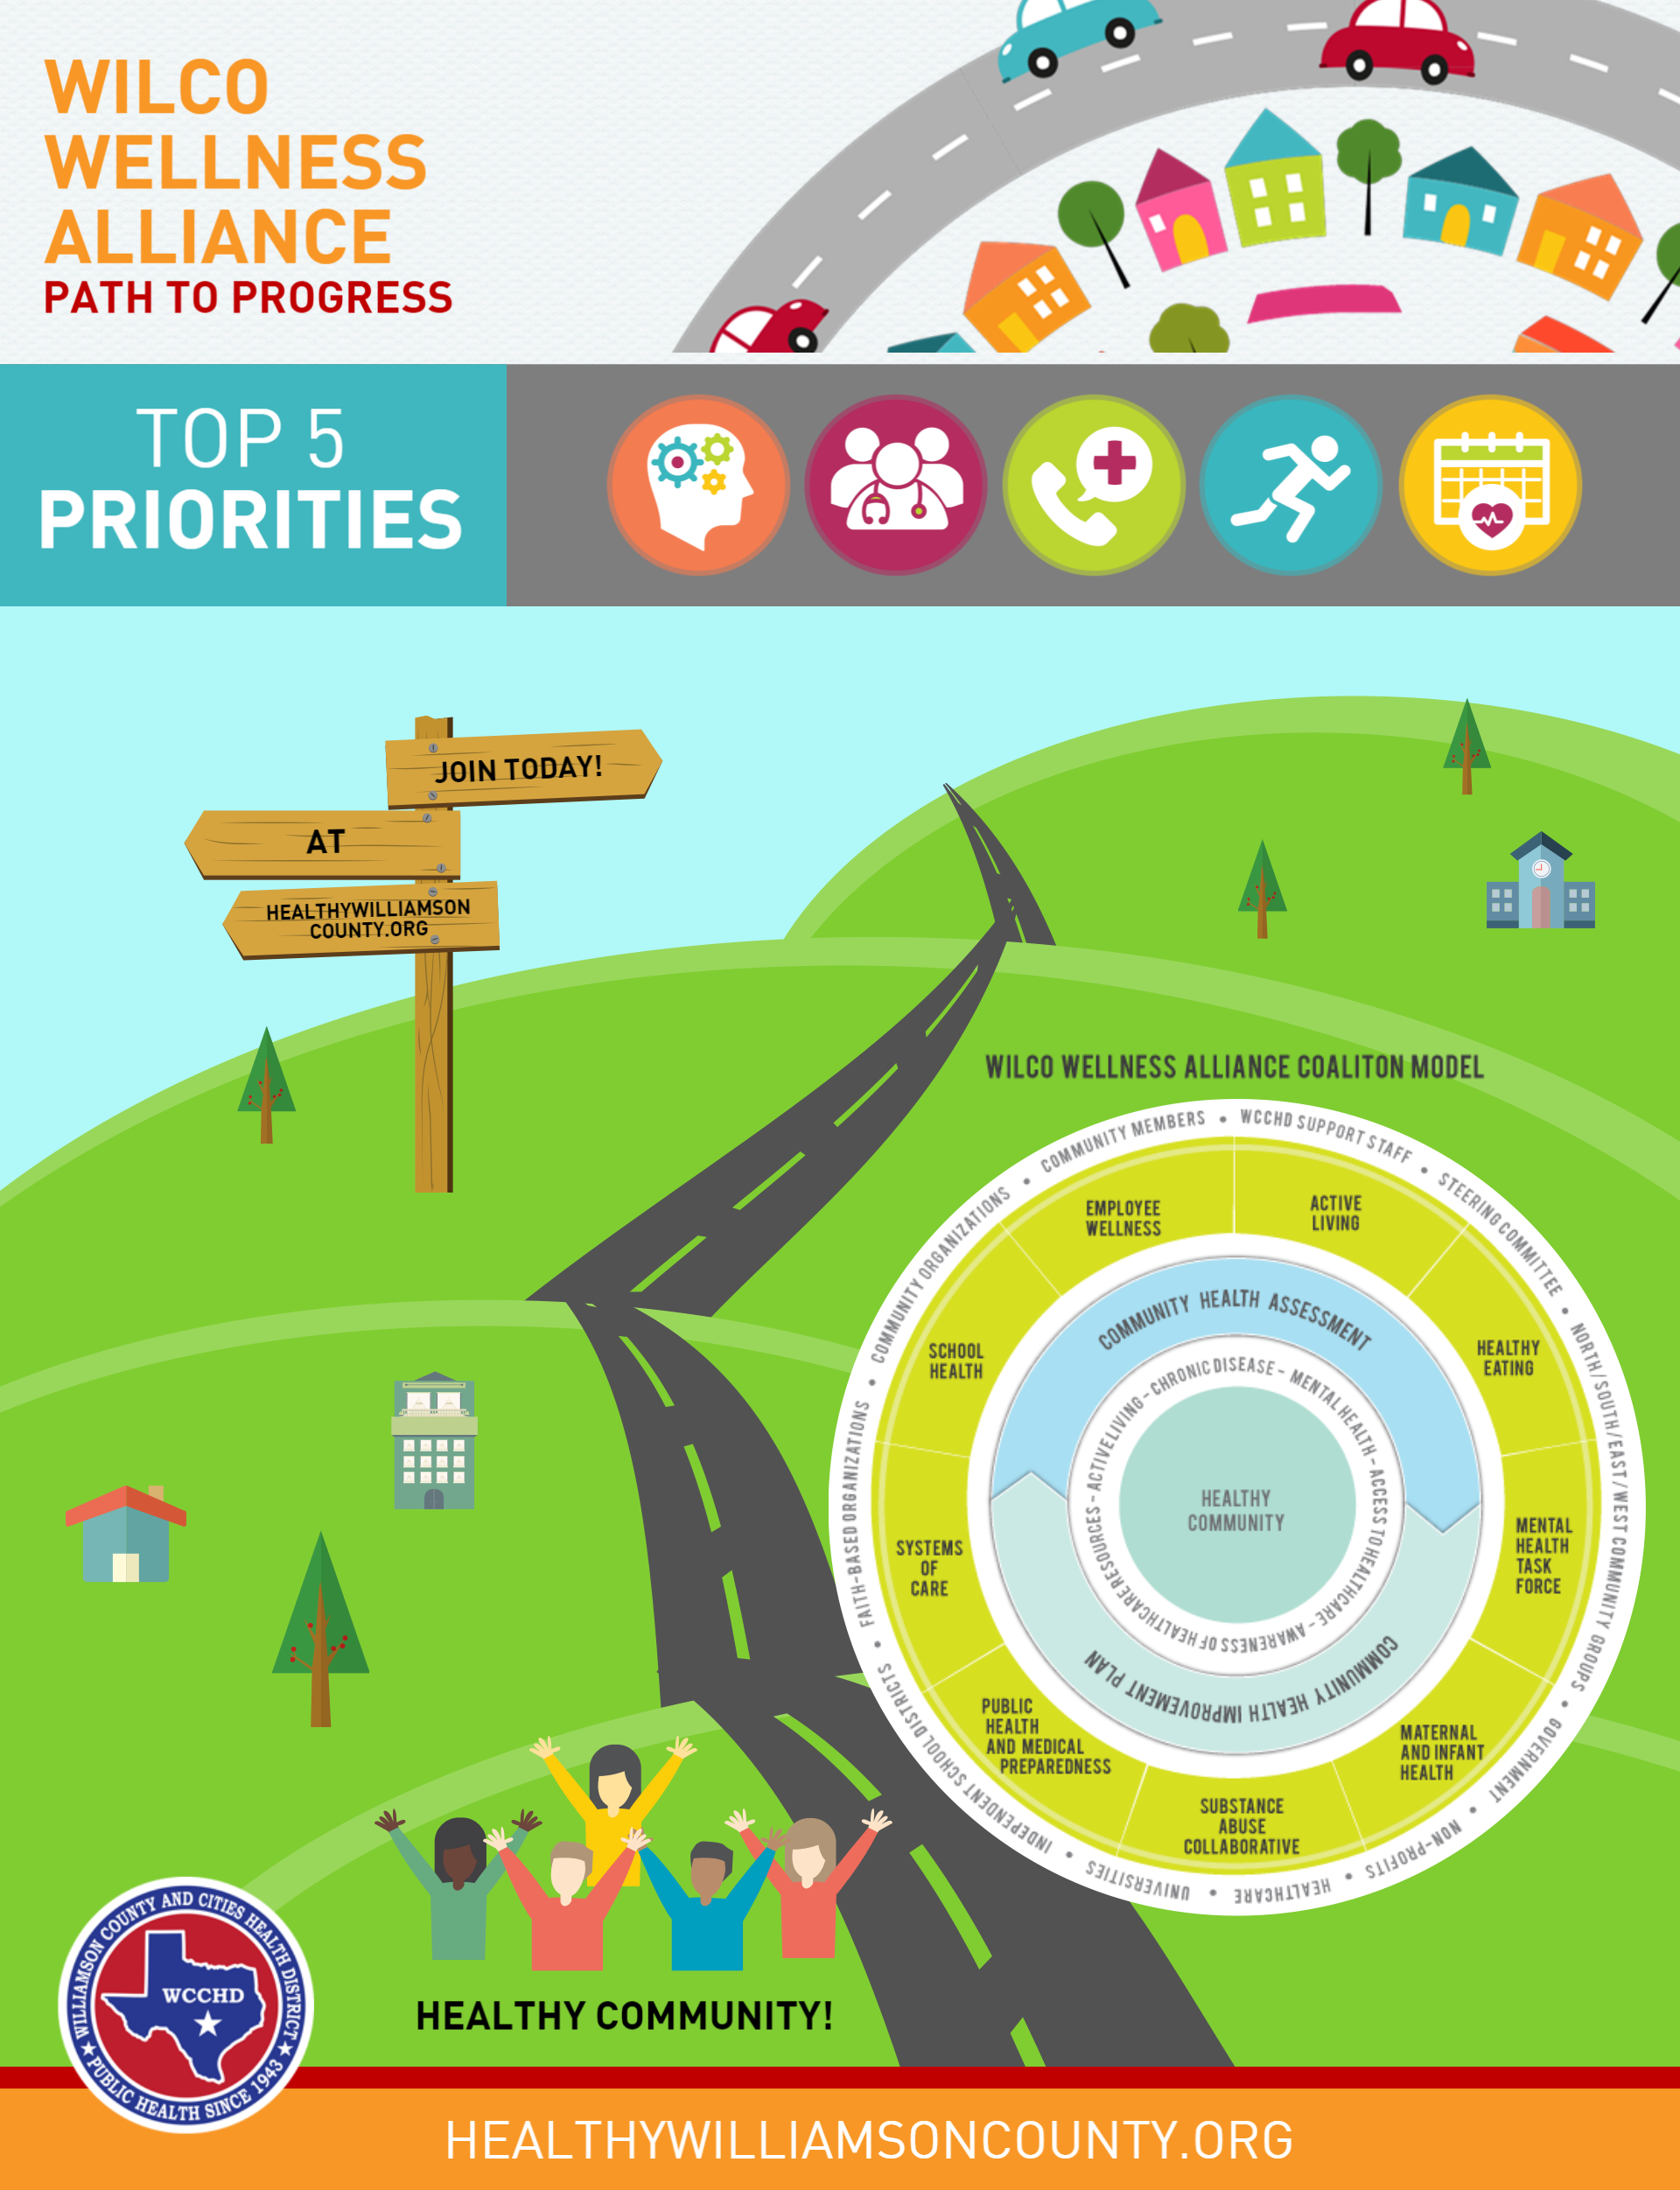 wilco wellness alliance path to progress: top 5 priorities infographic